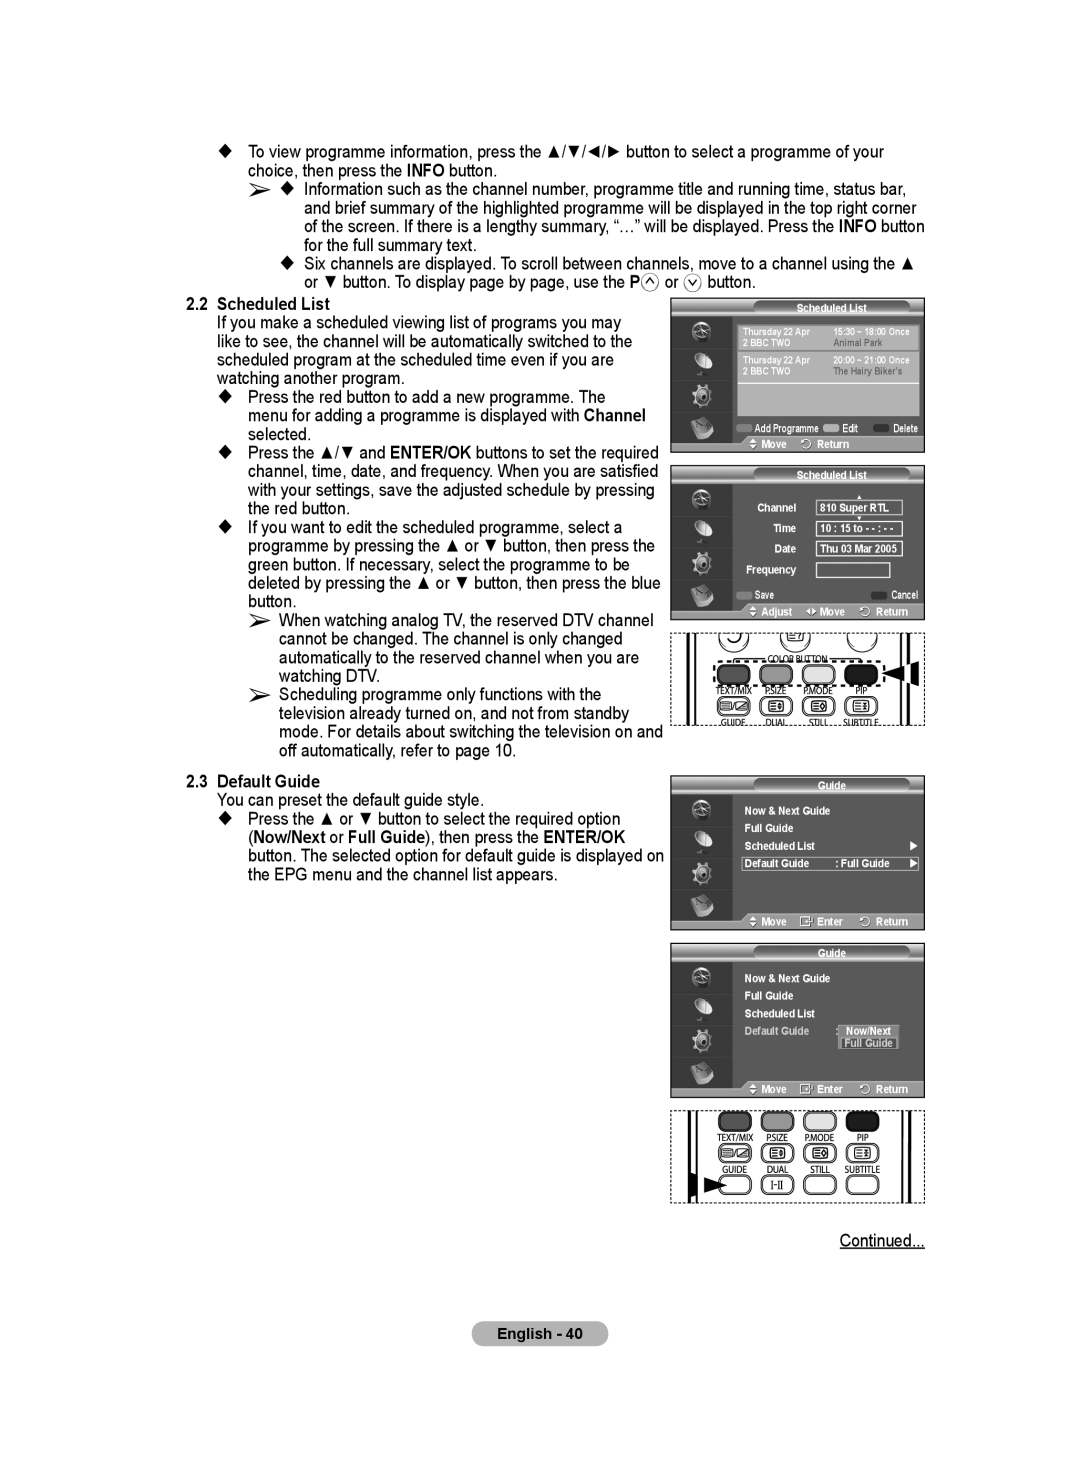 Samsung BN68-01171B-03 manual 2.2Scheduled List, 2.3Default Guide 